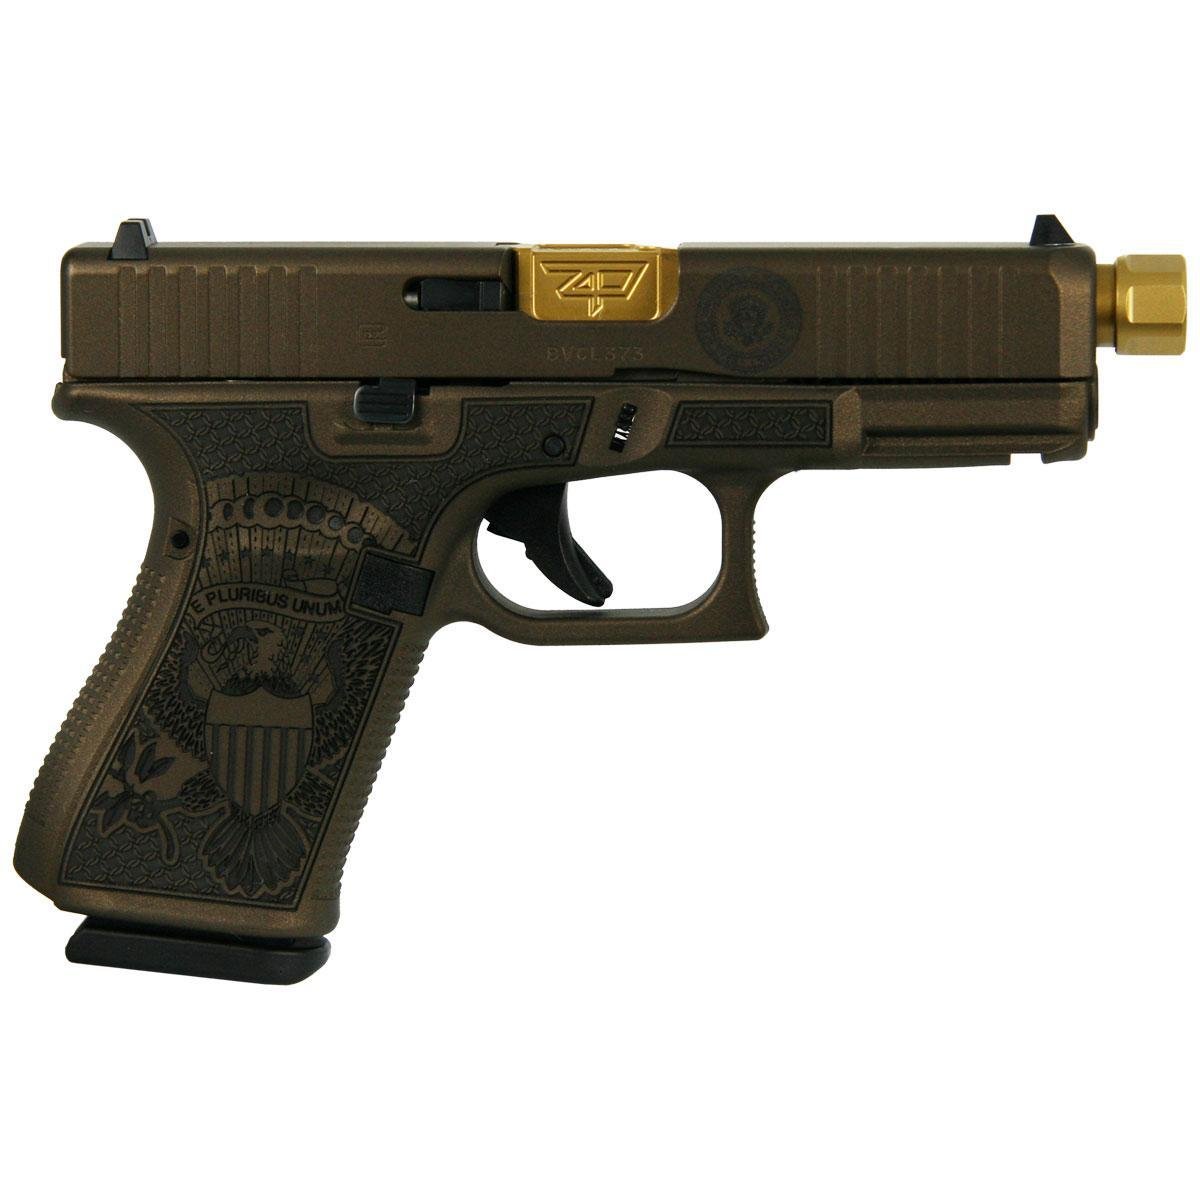 Glock 19 Gen 5 Compact  "Trump" Edition 9mm